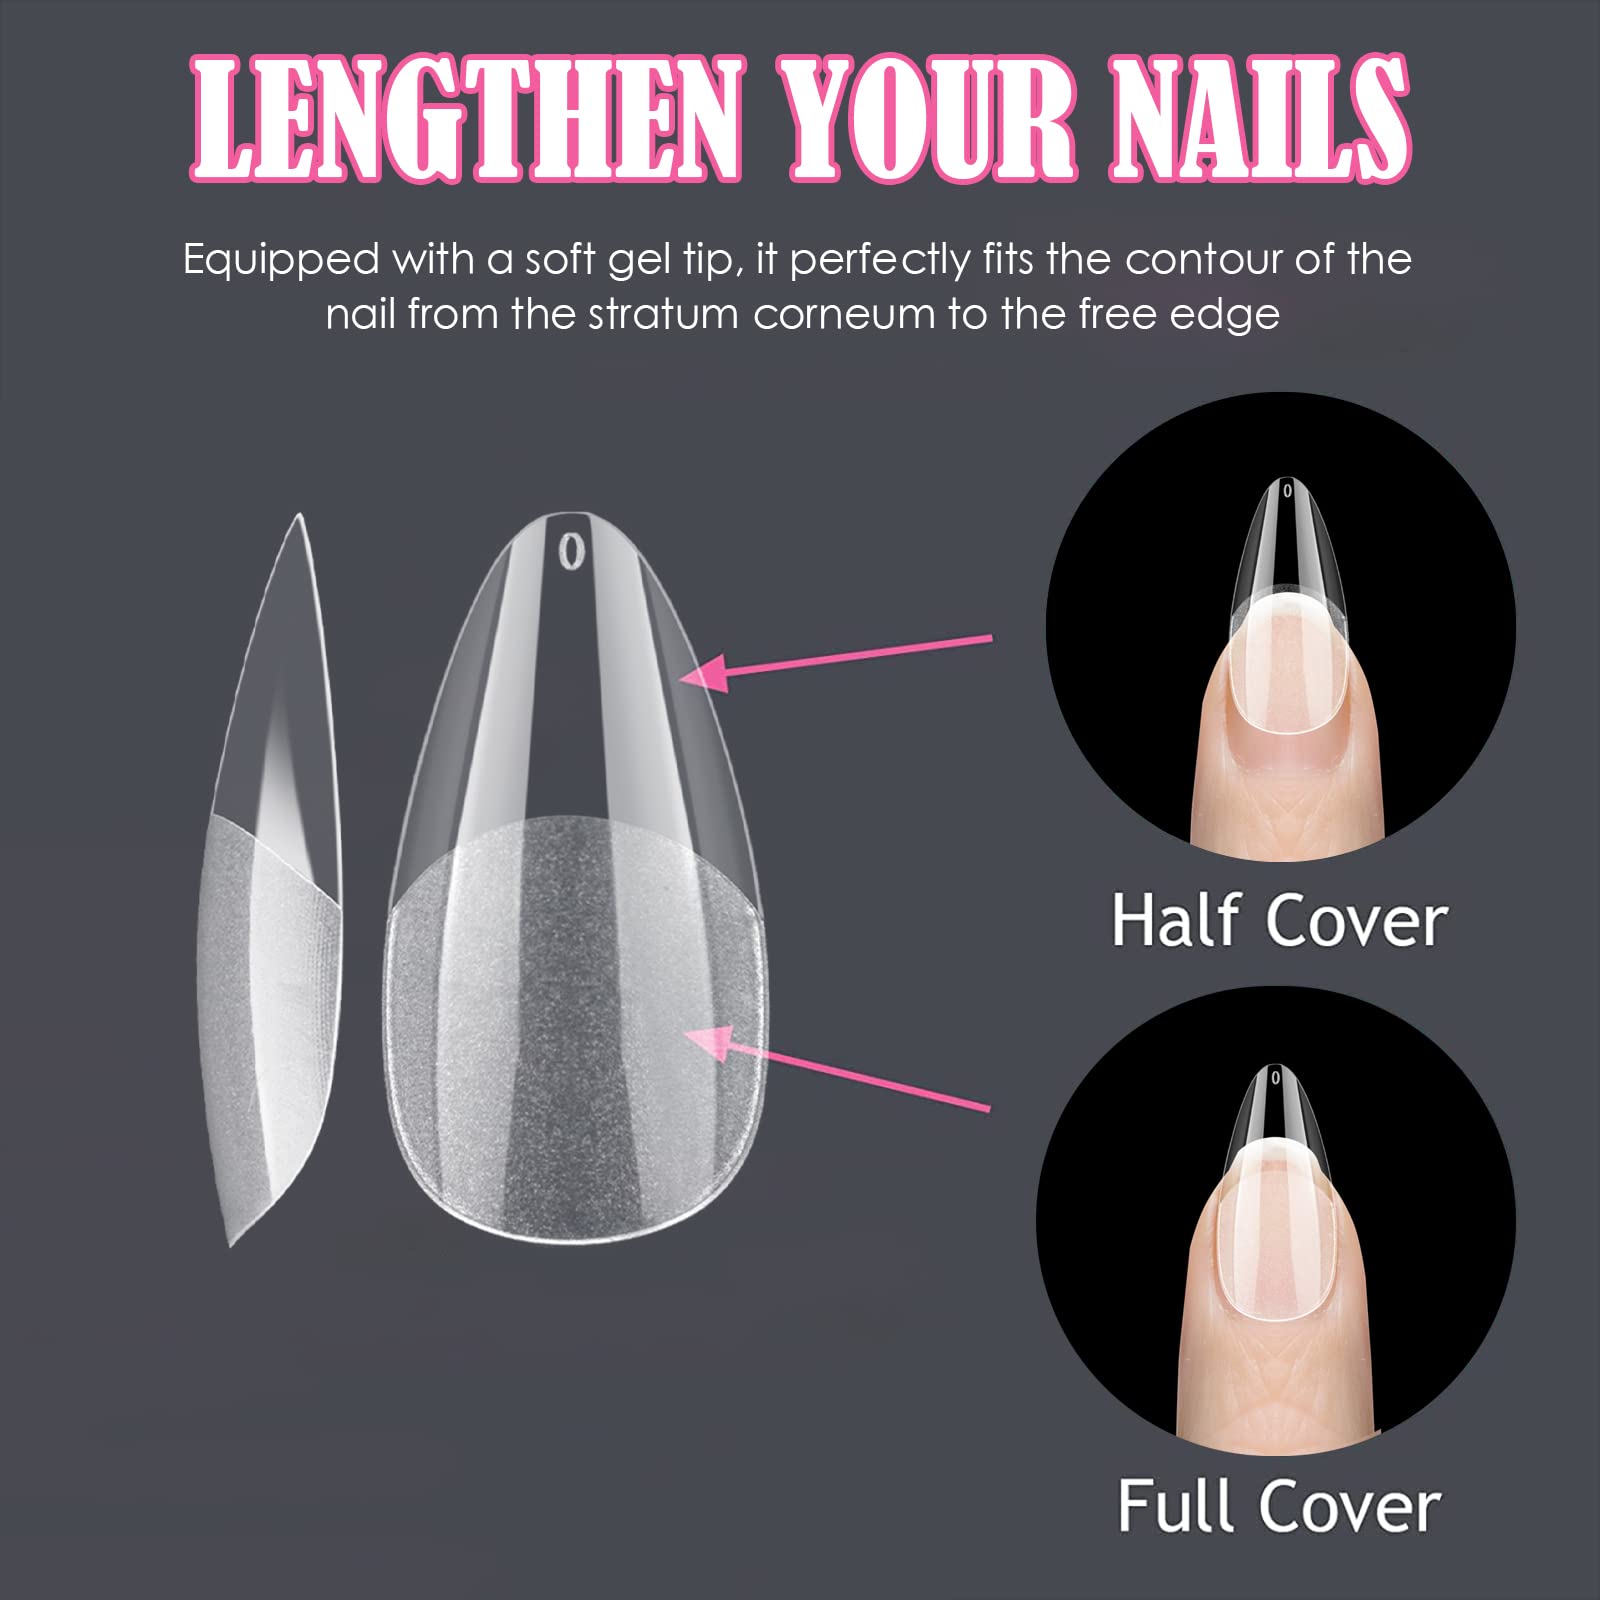 240PCS 12 Sizes Short Almond Gel Nail Tips Set, Soft Nail Art Gel Nail Extensions, Pre-Buffed Artificial Nails Gel Nail Tips Kit, Fit All Nails